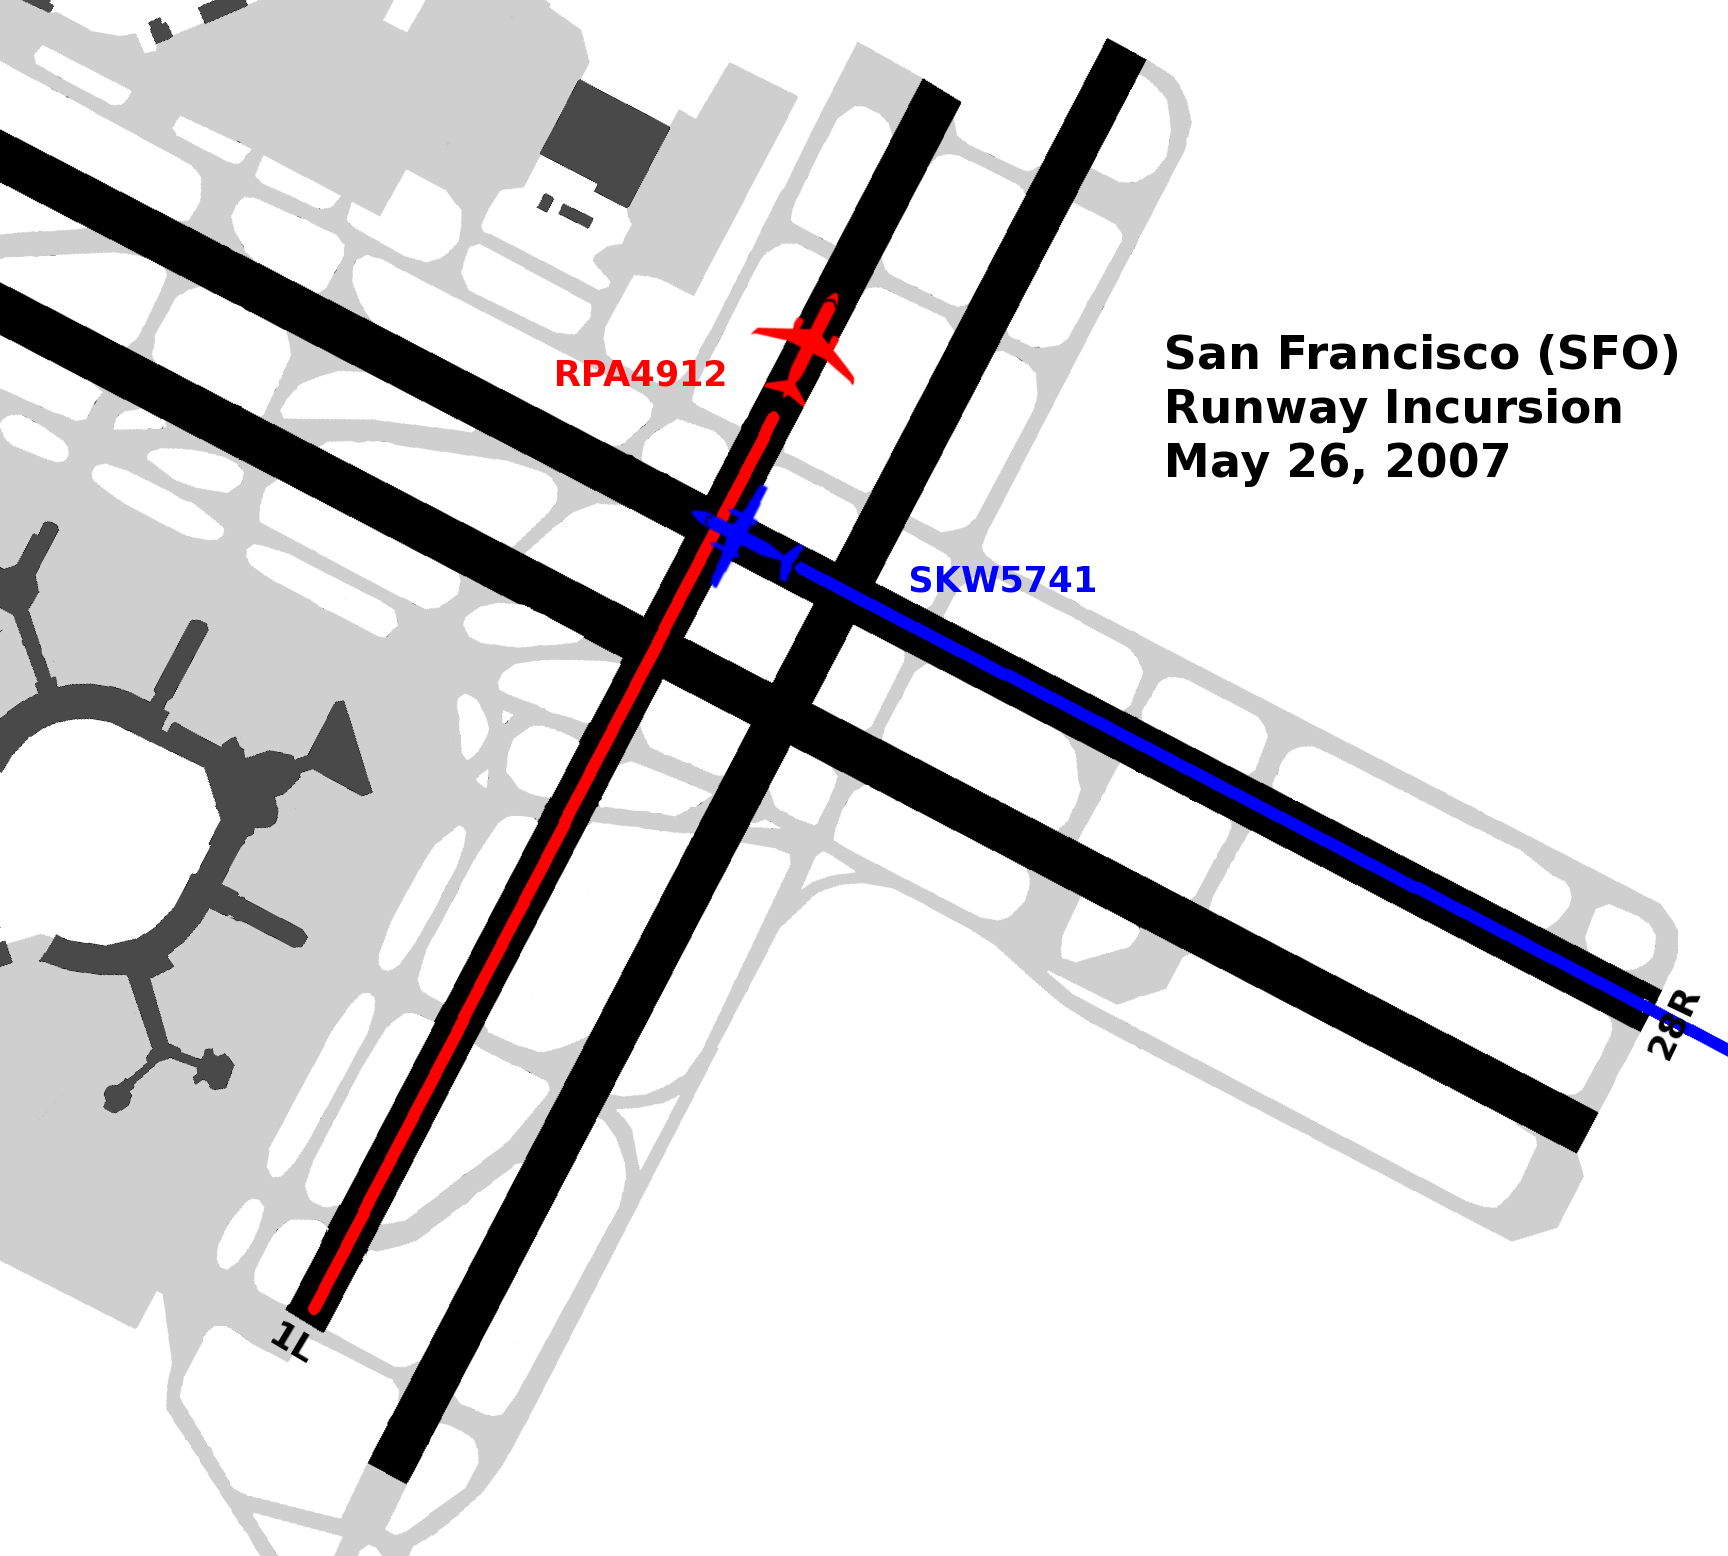 Visual representation of the runway incursion at SFO in 2007